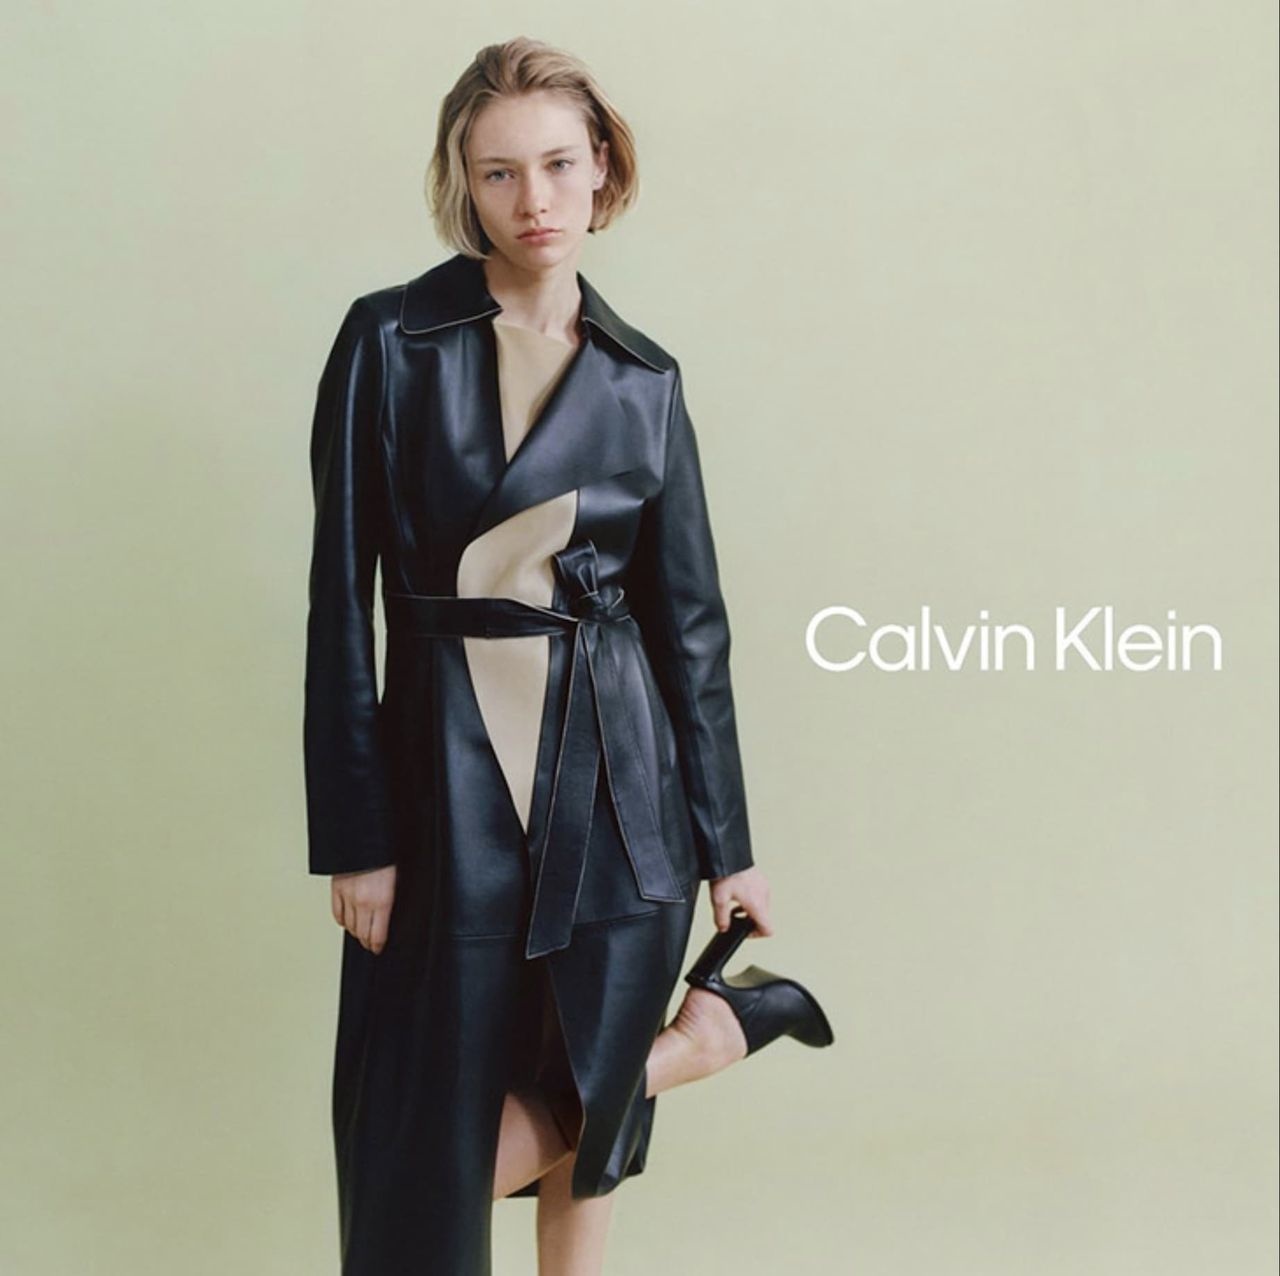 Calvin Klein Fall Winter 2022-23 Campaign